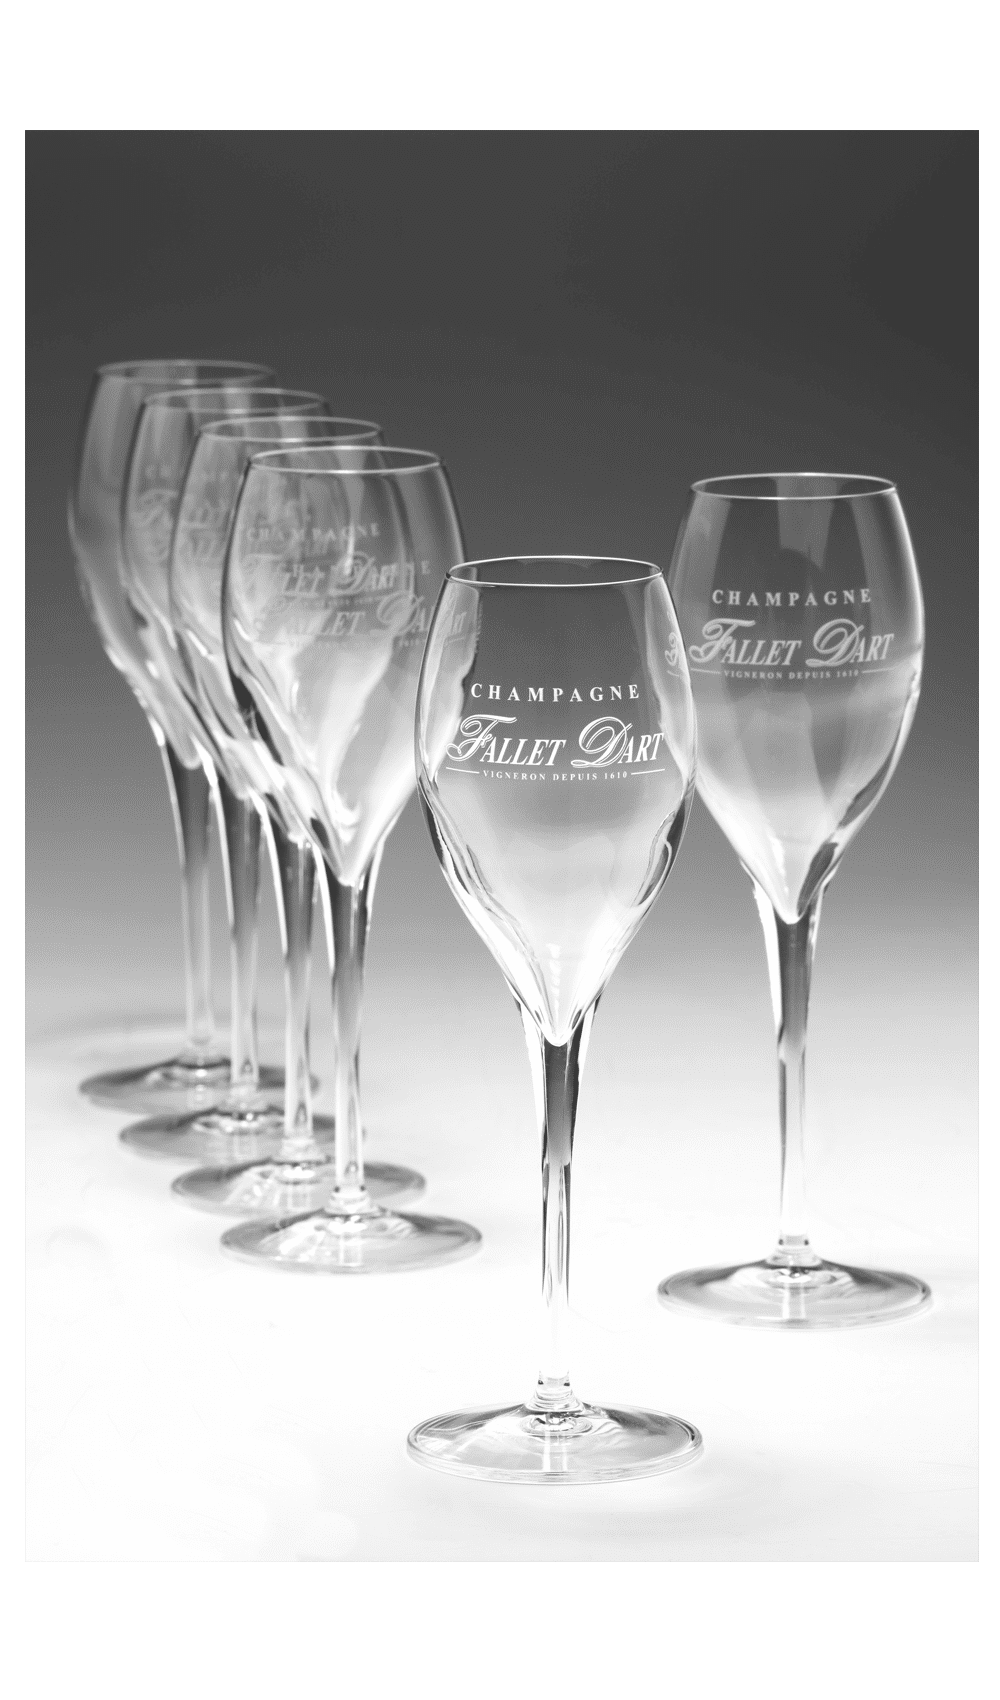 6 Champagne Glasses - Champagne Fallet Dart